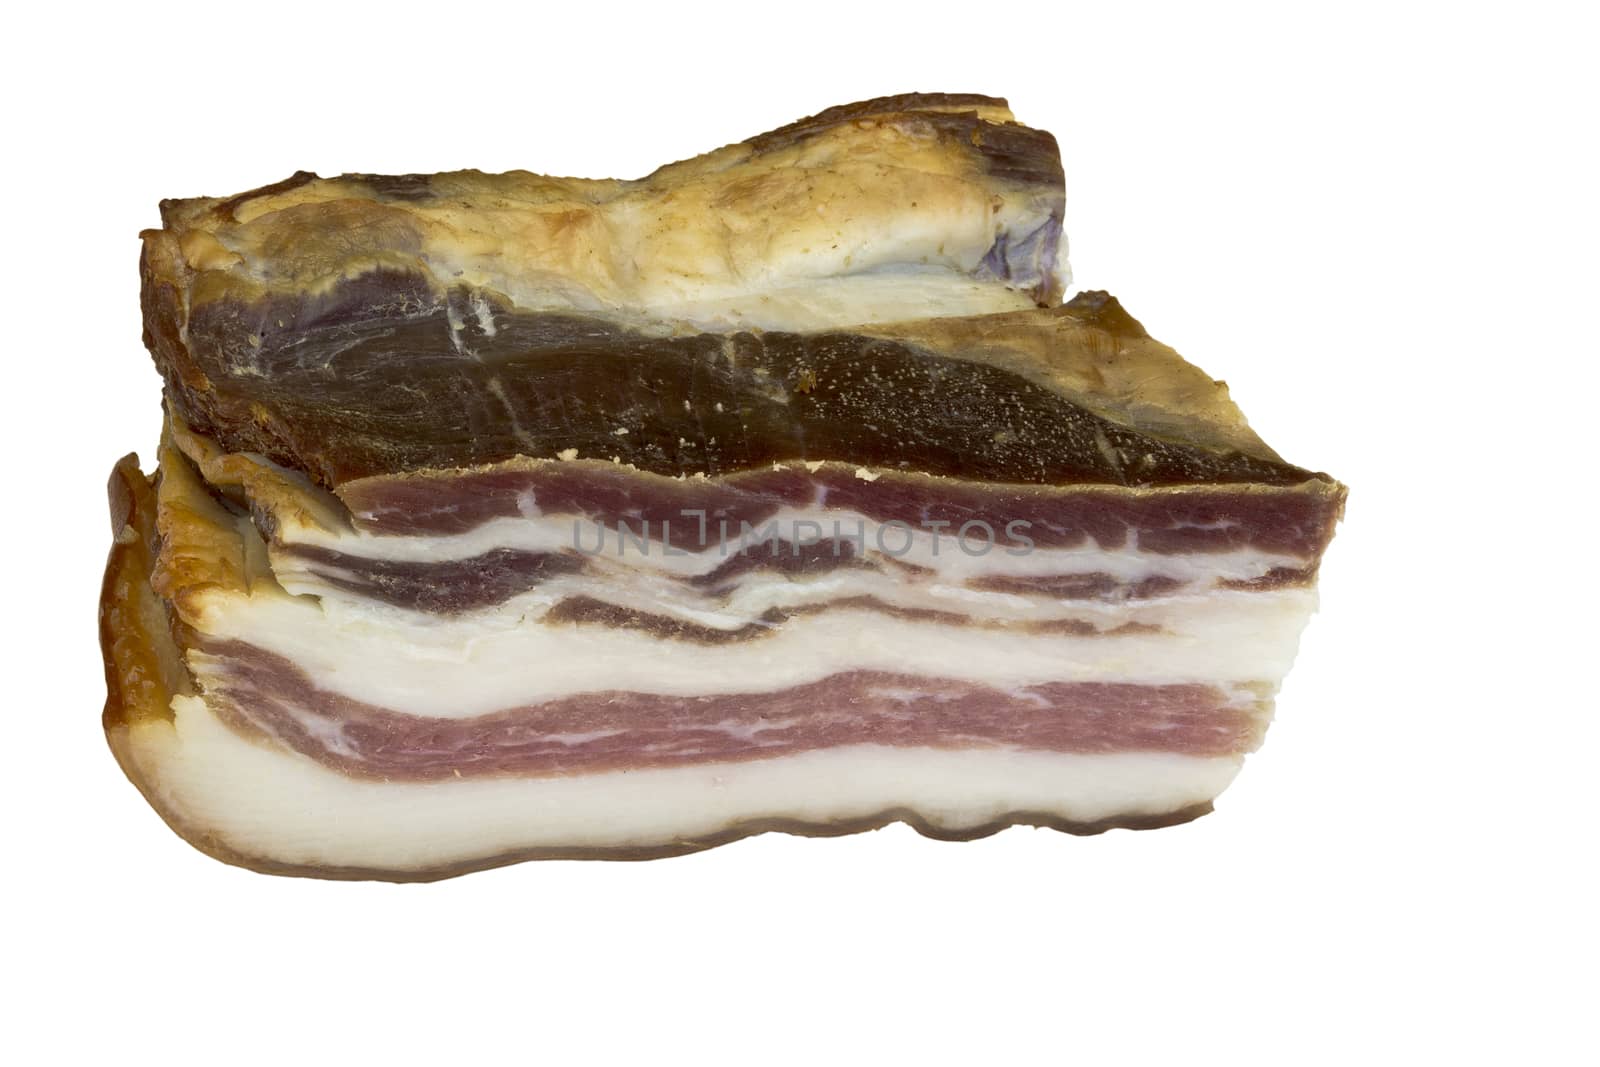  Smoked bacon chunk, isolated on white background